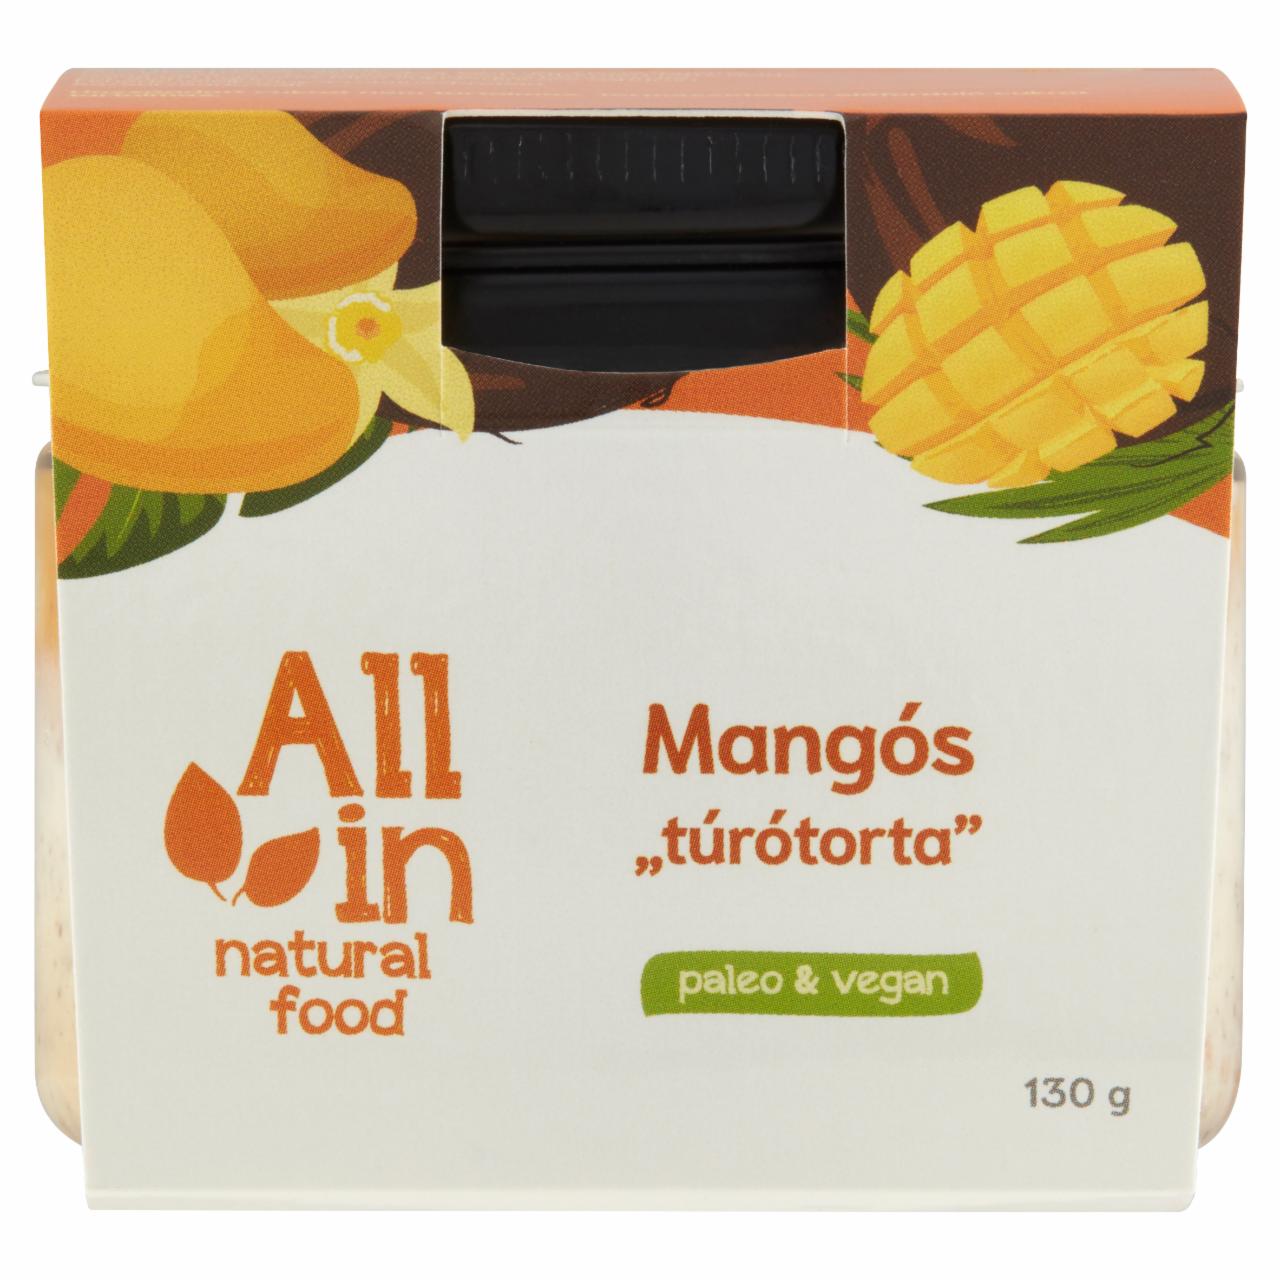 Képek - ALL IN natural food paleo & vegan mangós „túrótorta